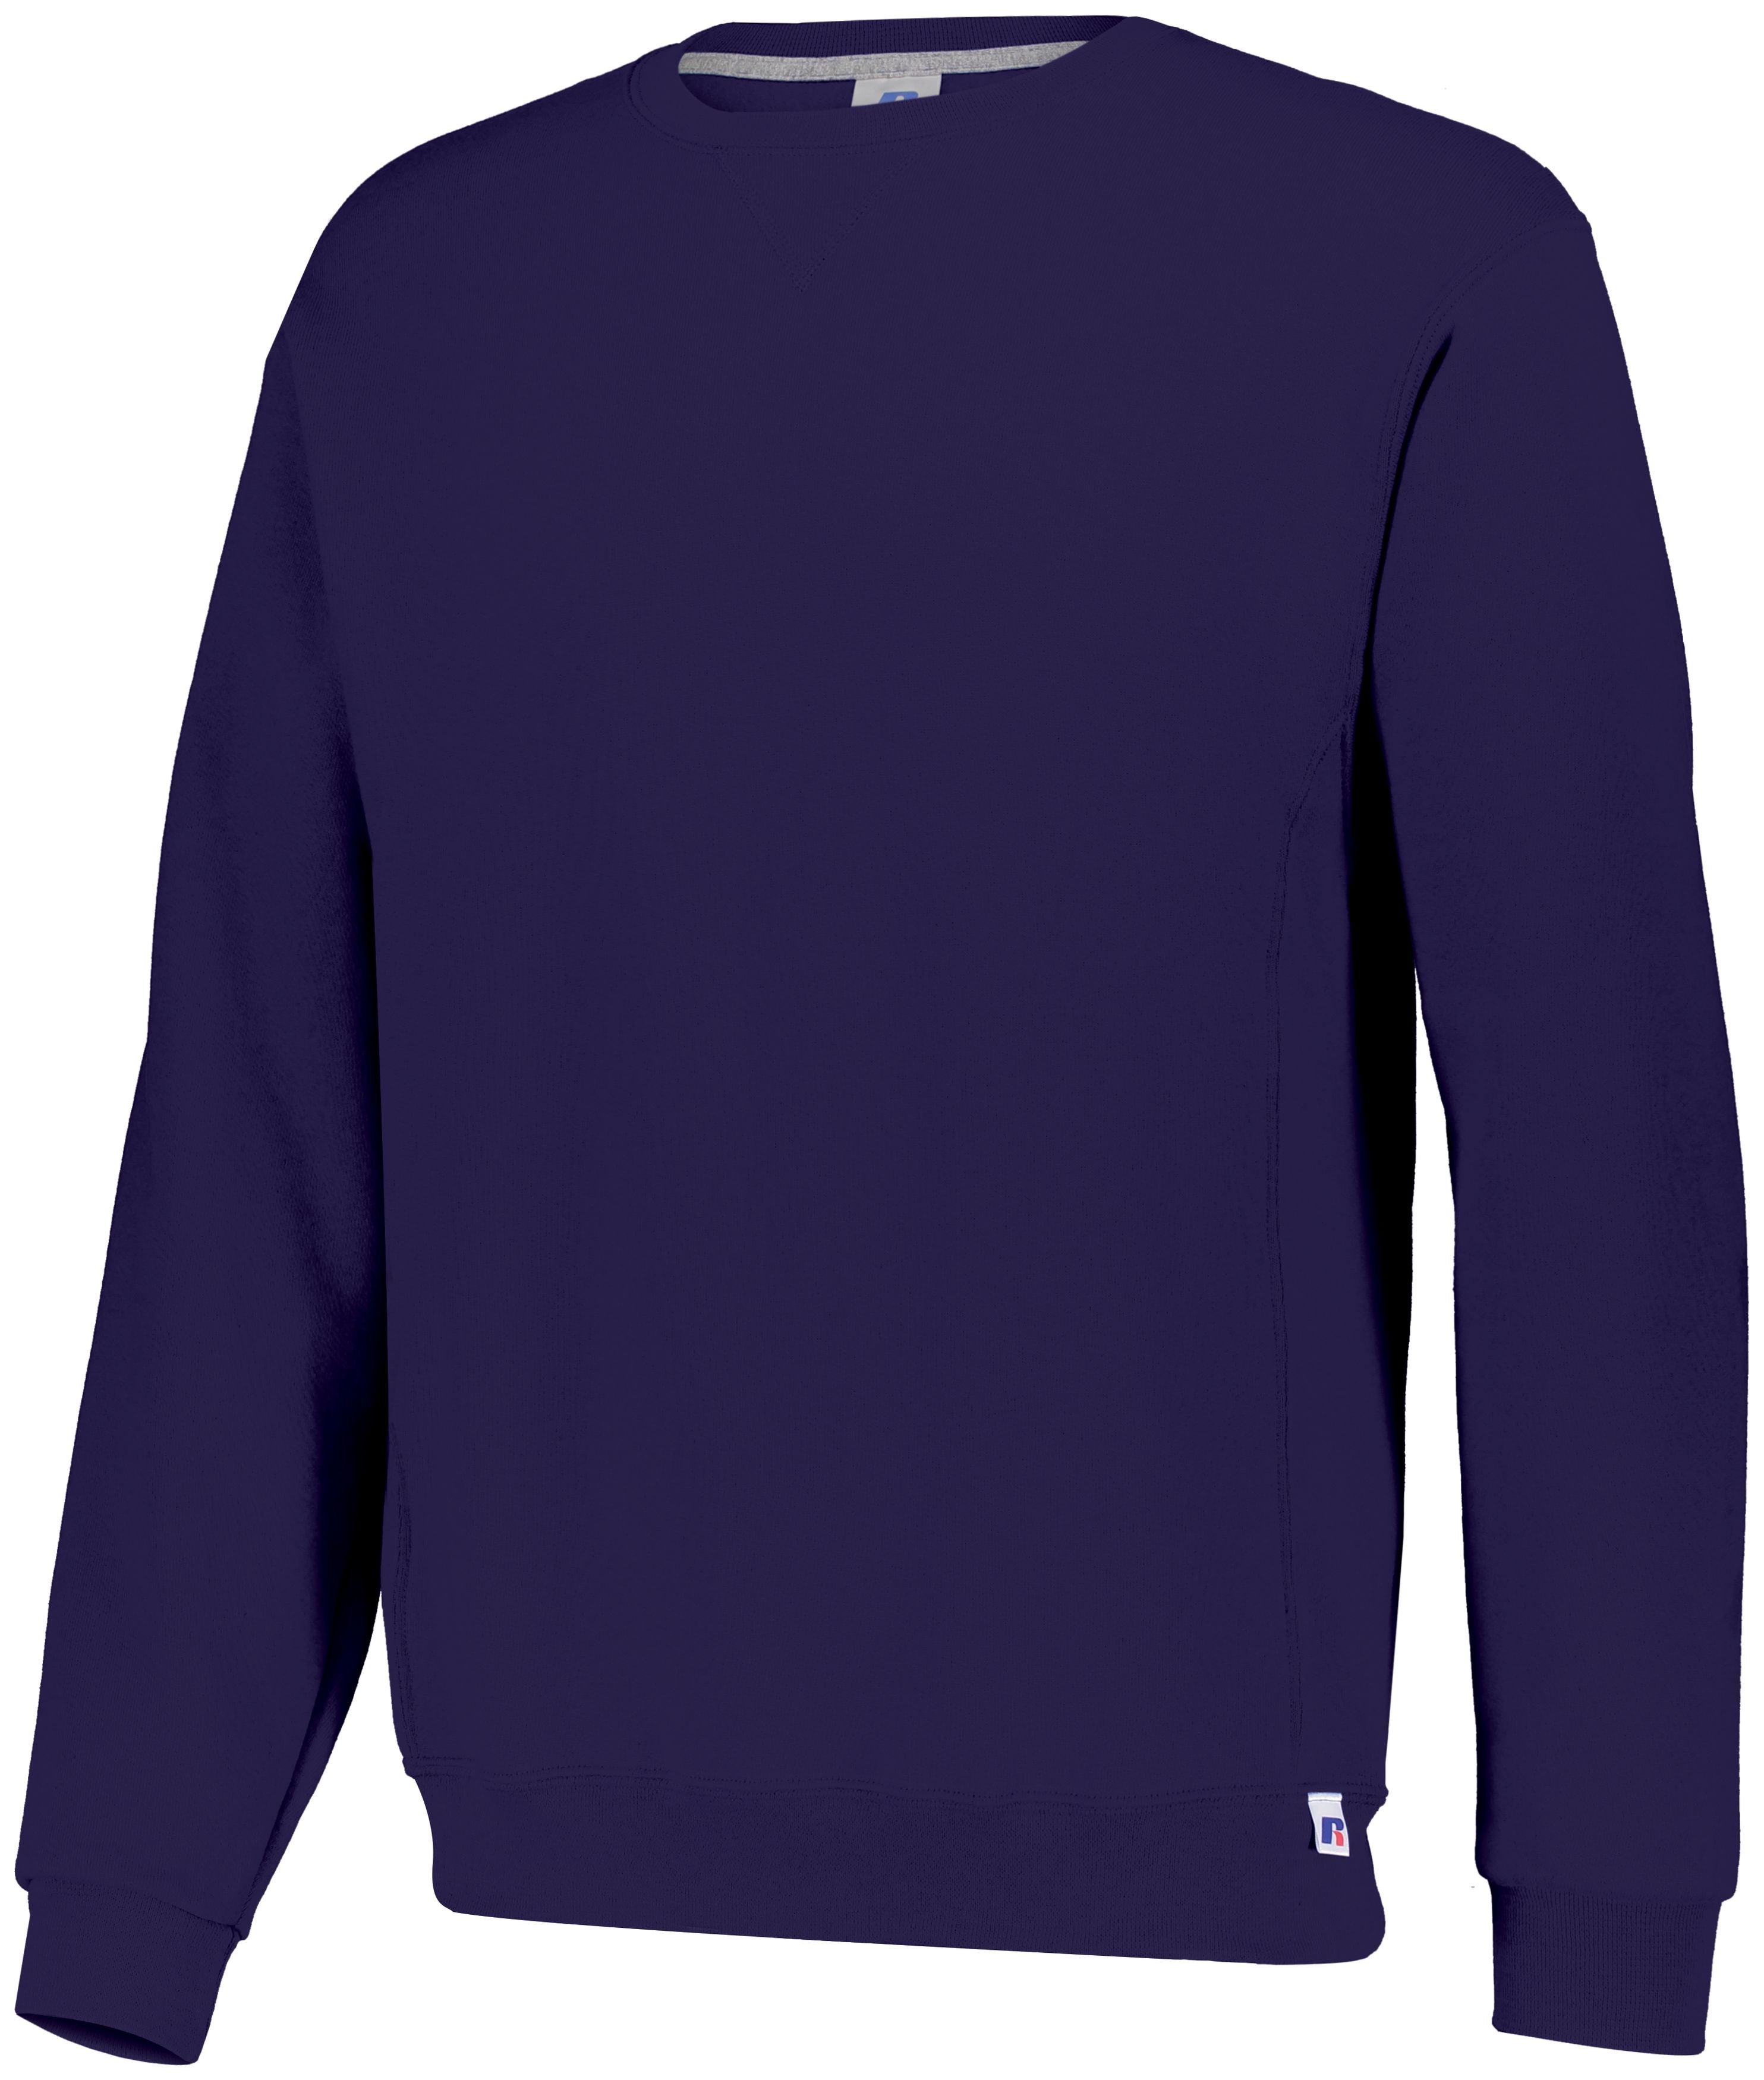 Russell Athletic Dri-Power  Fleece Crew Sweatshirt in Purple  -Part of the Adult, Adult-Sweatshirt, Russell-Athletic-Products, Outerwear product lines at KanaleyCreations.com